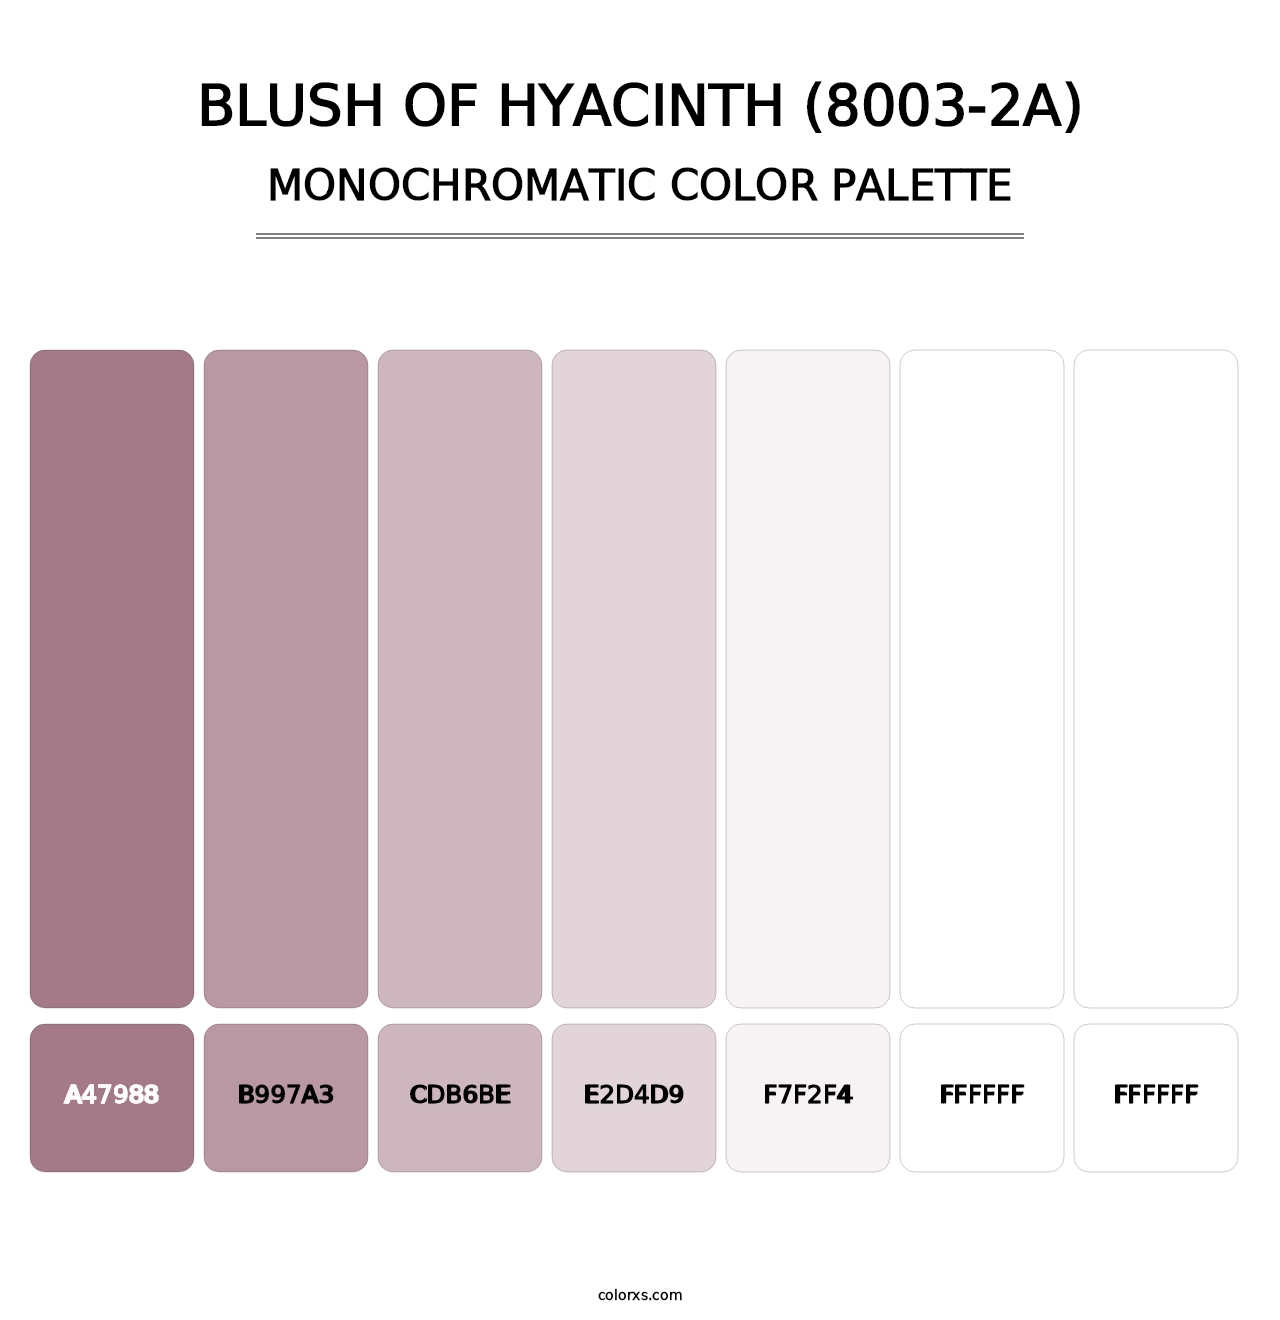 Blush of Hyacinth (8003-2A) - Monochromatic Color Palette